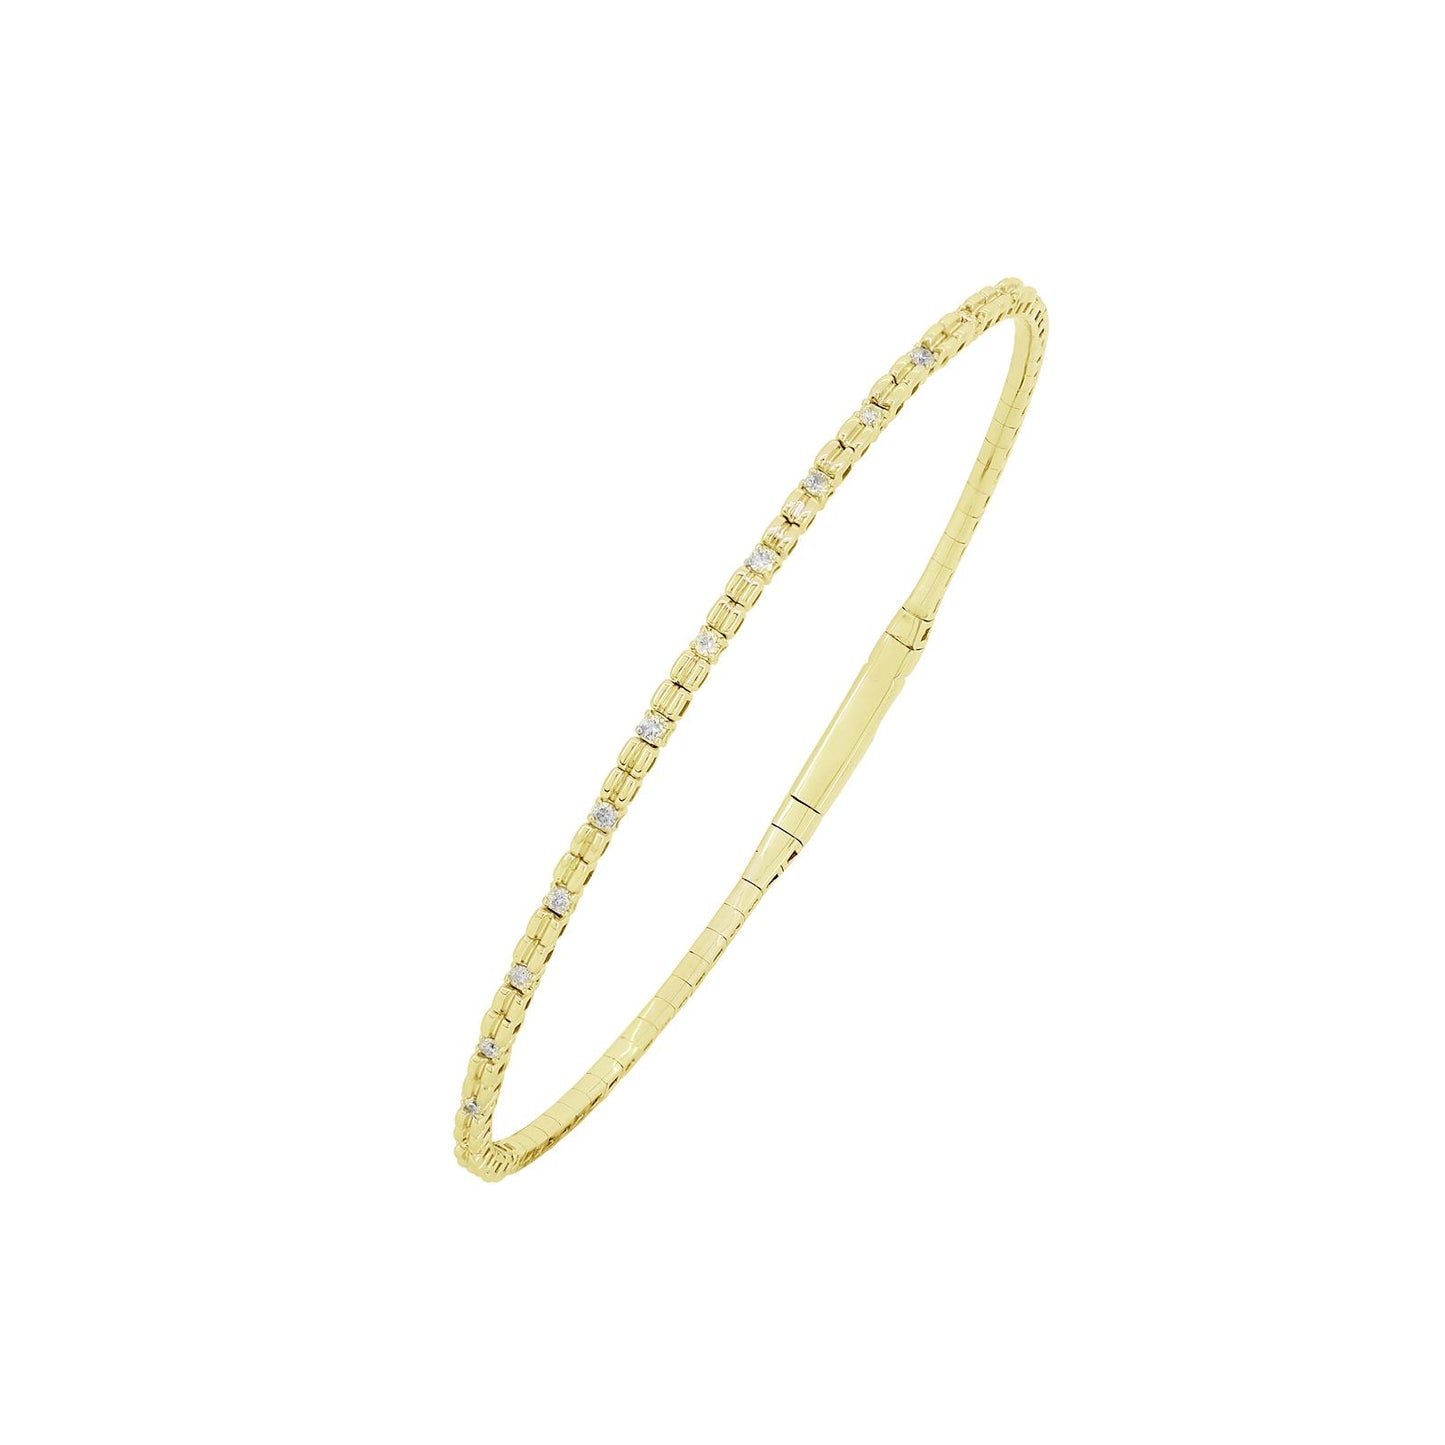 14K Yellow Gold Bangle Bracelet With Diamond Stations